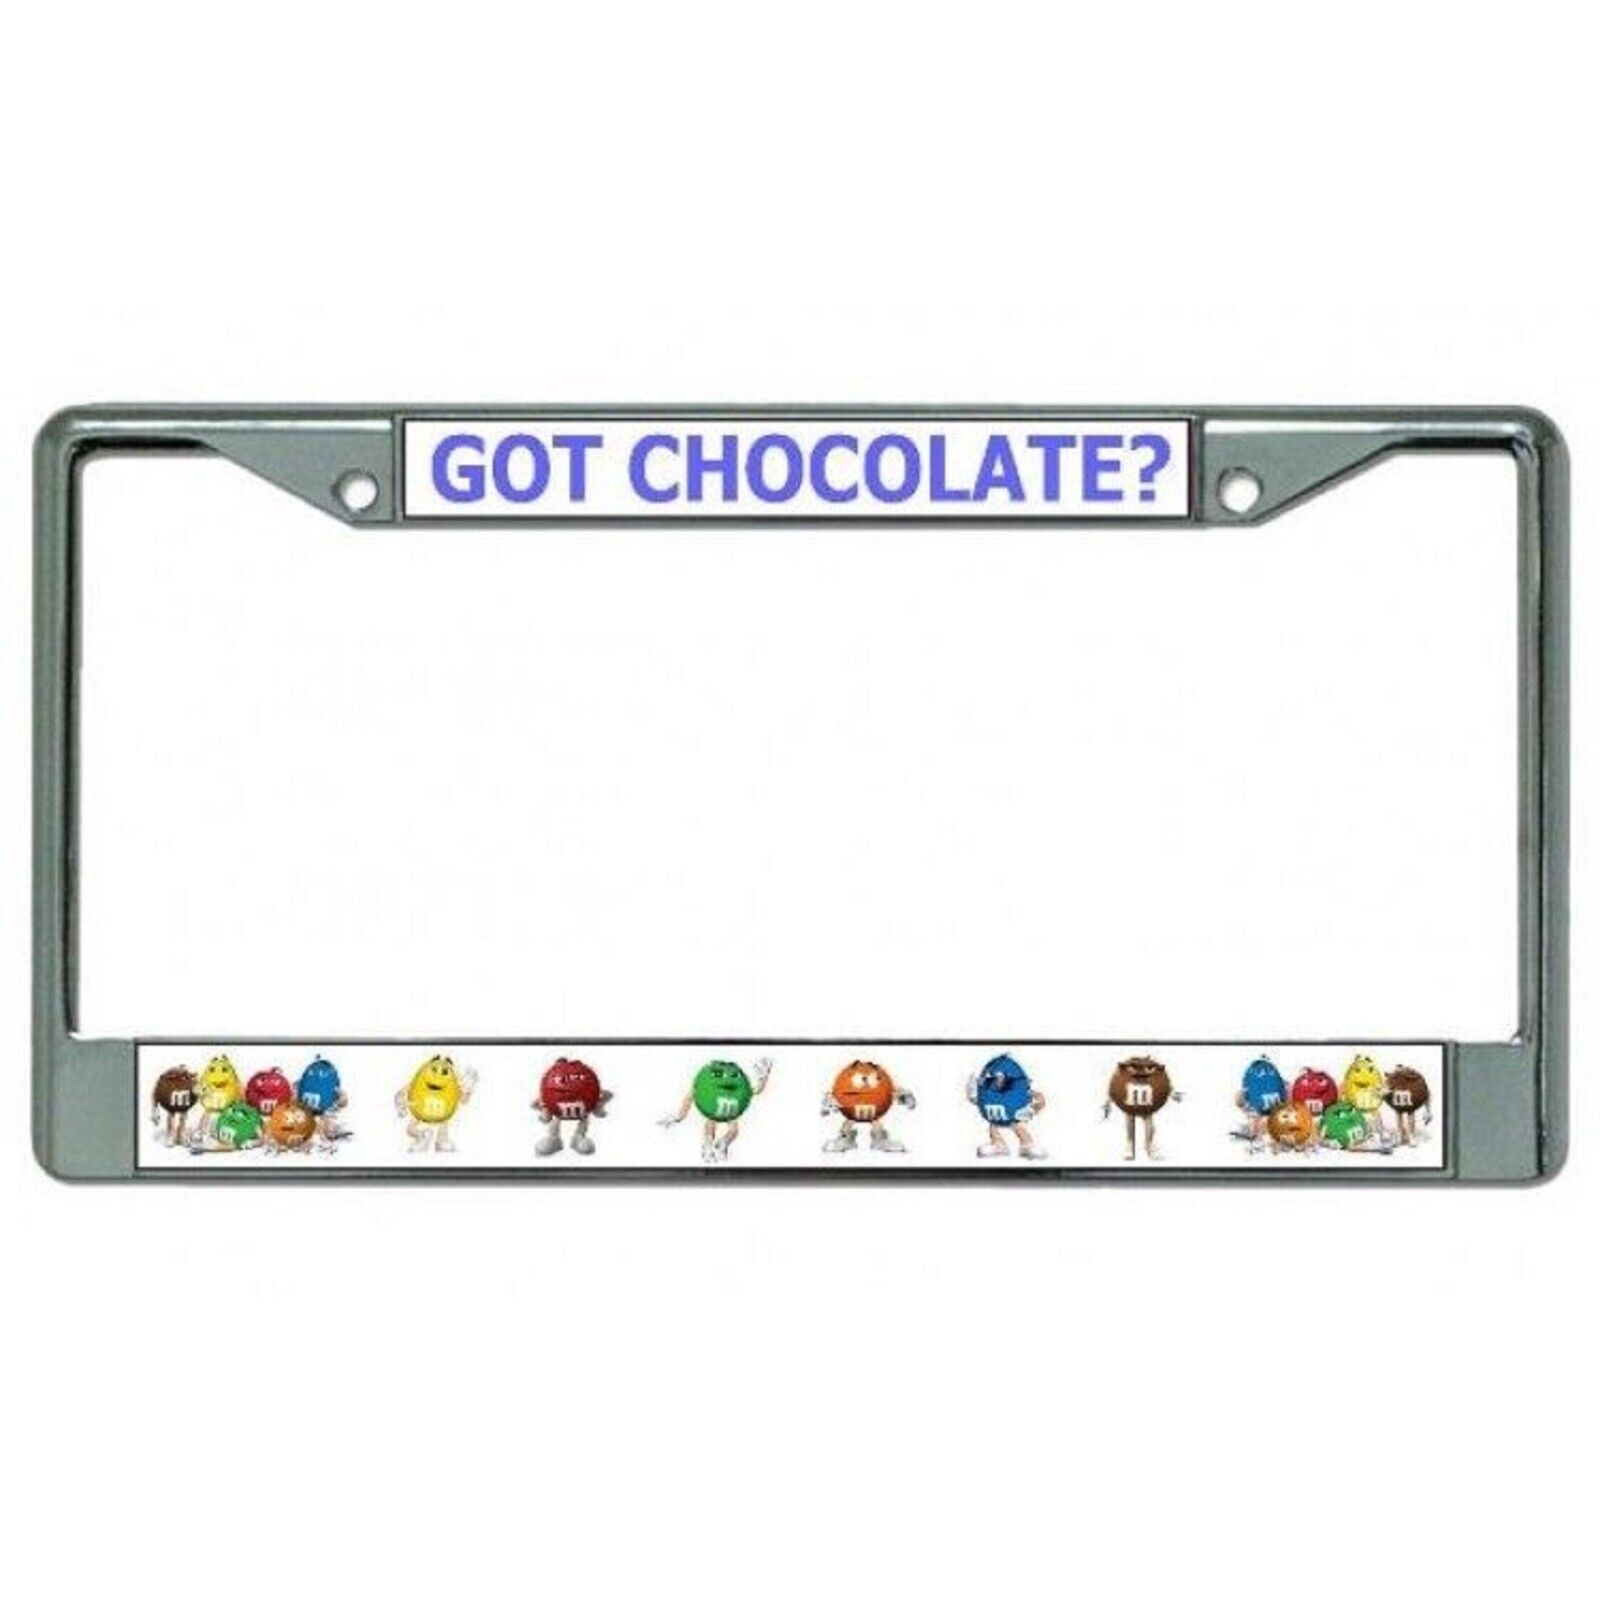 got chocolate m&m logo license plate frame made in usa